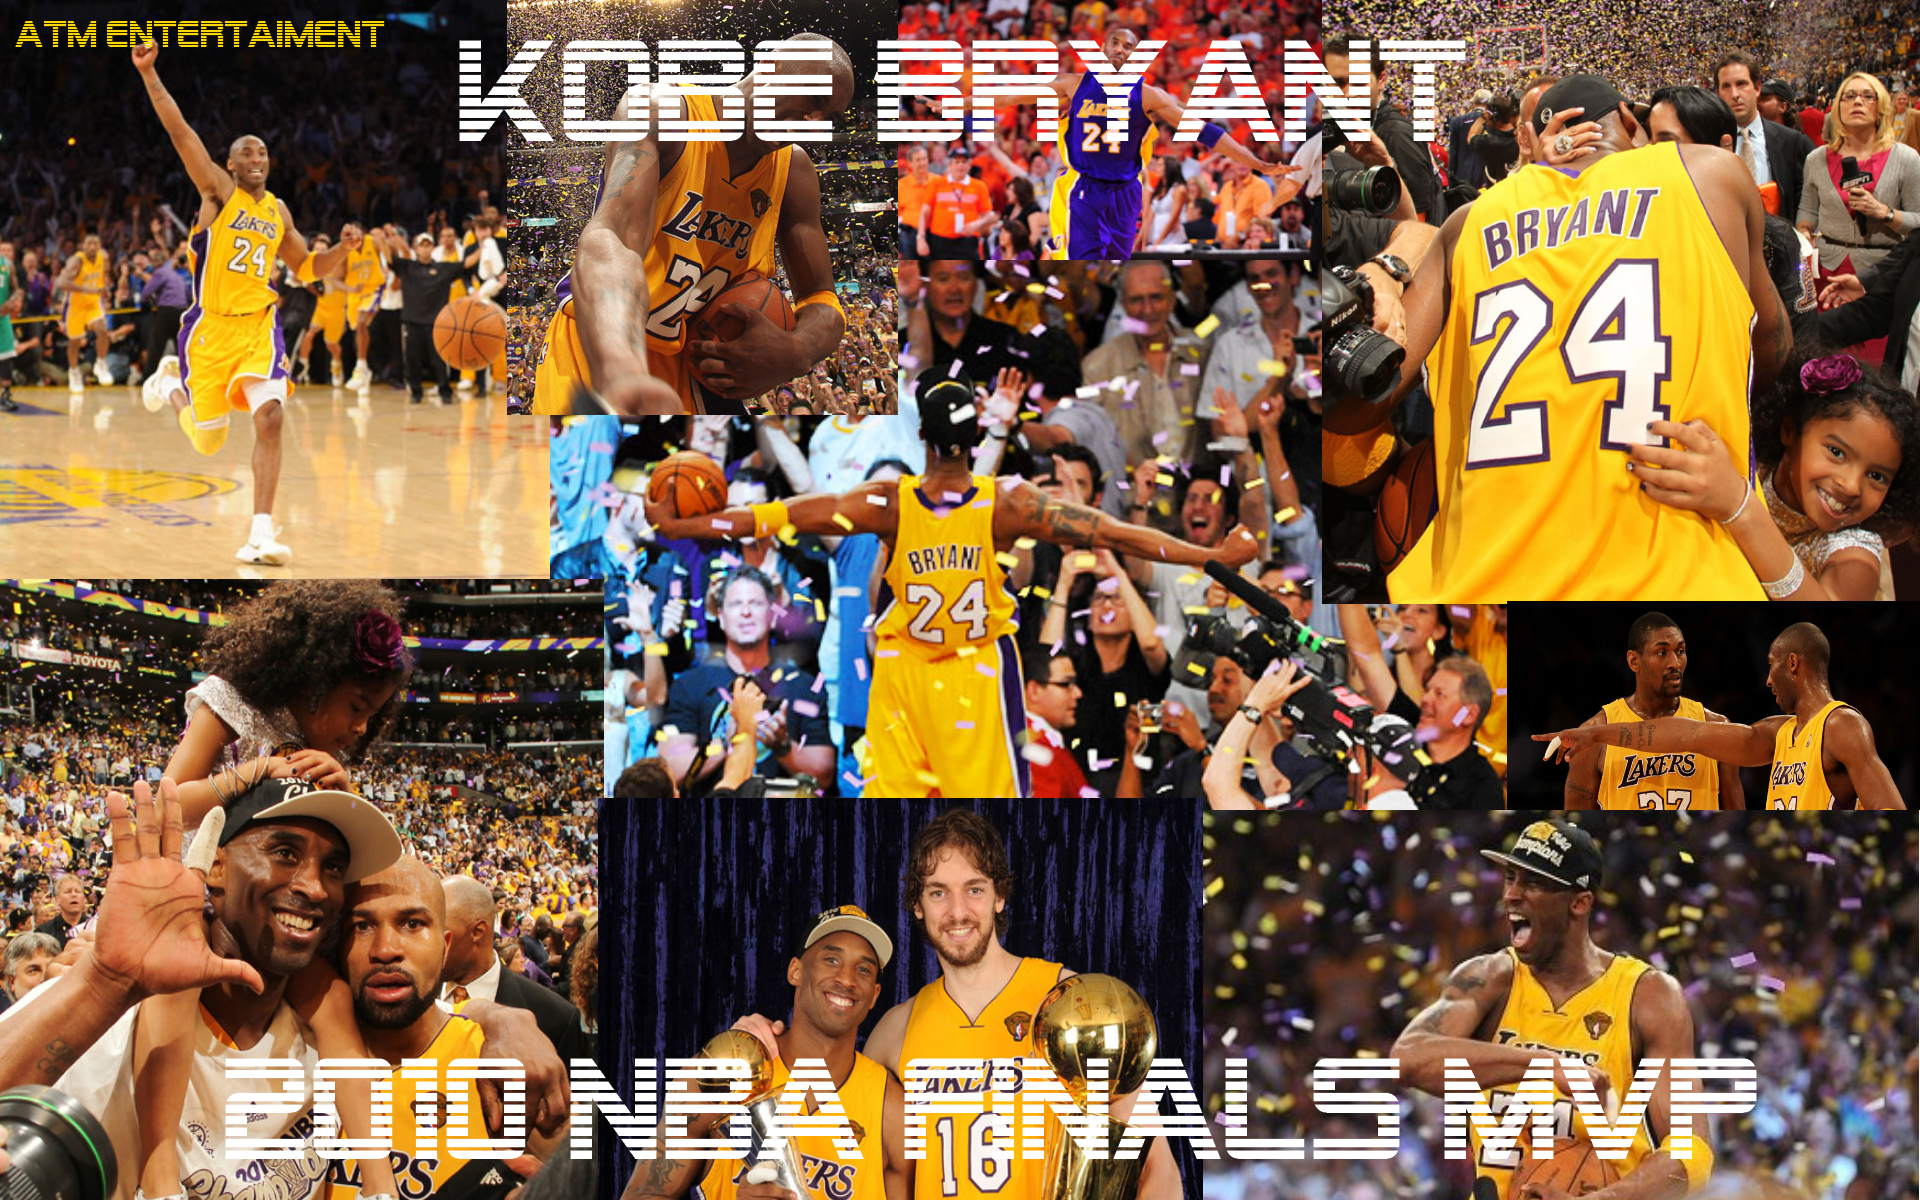 Kobe Bryant 2010 Finals MVP Downloads! | ATM Entertainment